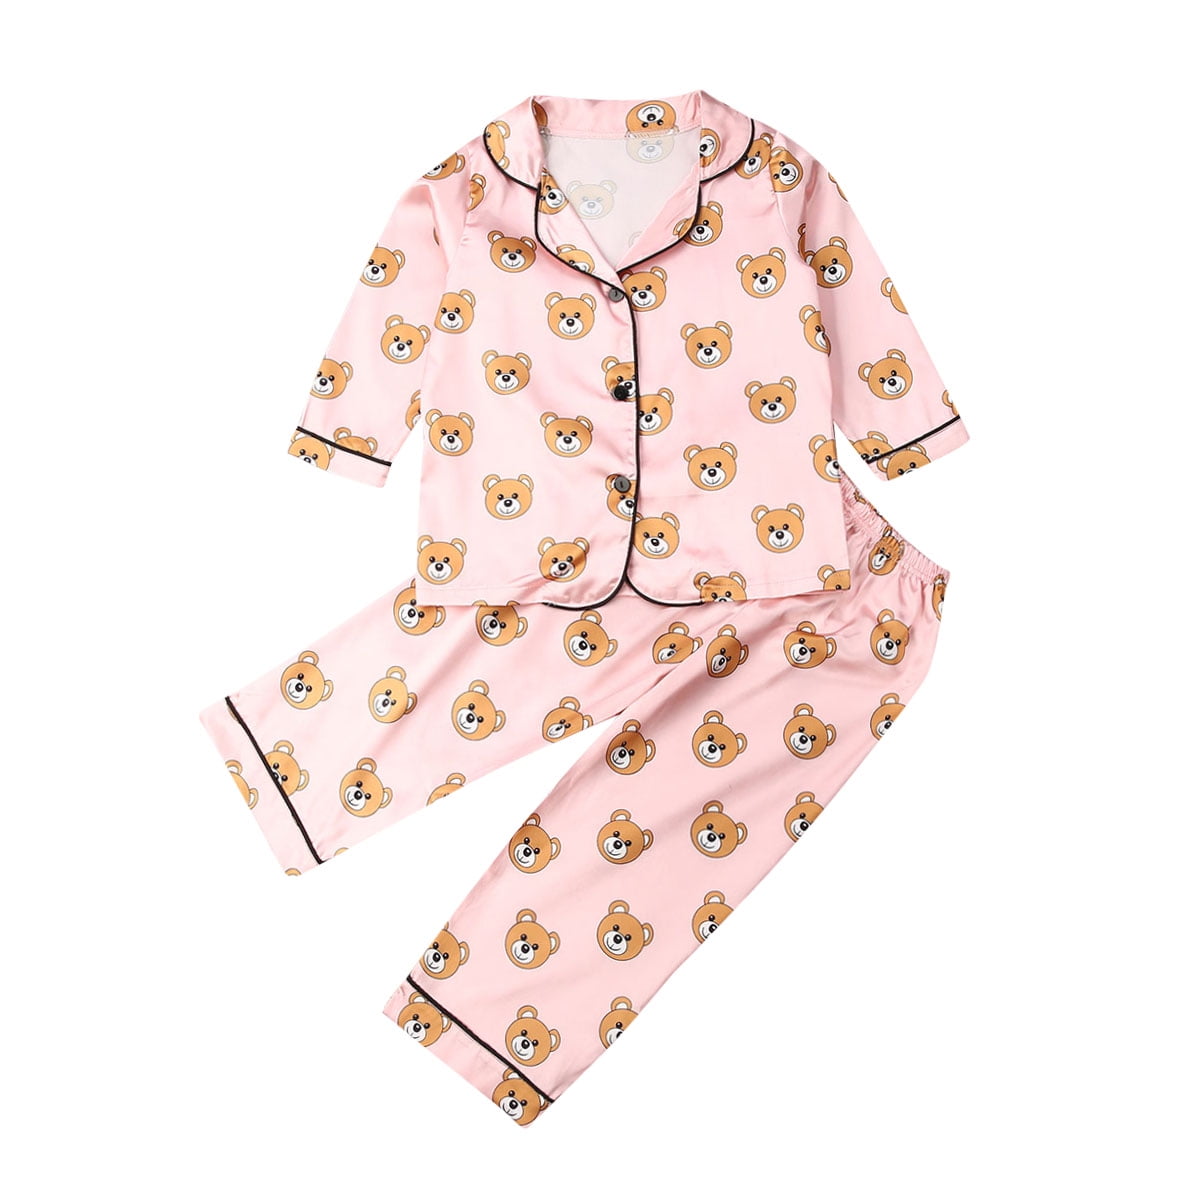 Sleepwear Pajamas Kids Clothes Boys Girls Cartoon Bear Print Outfits Set 